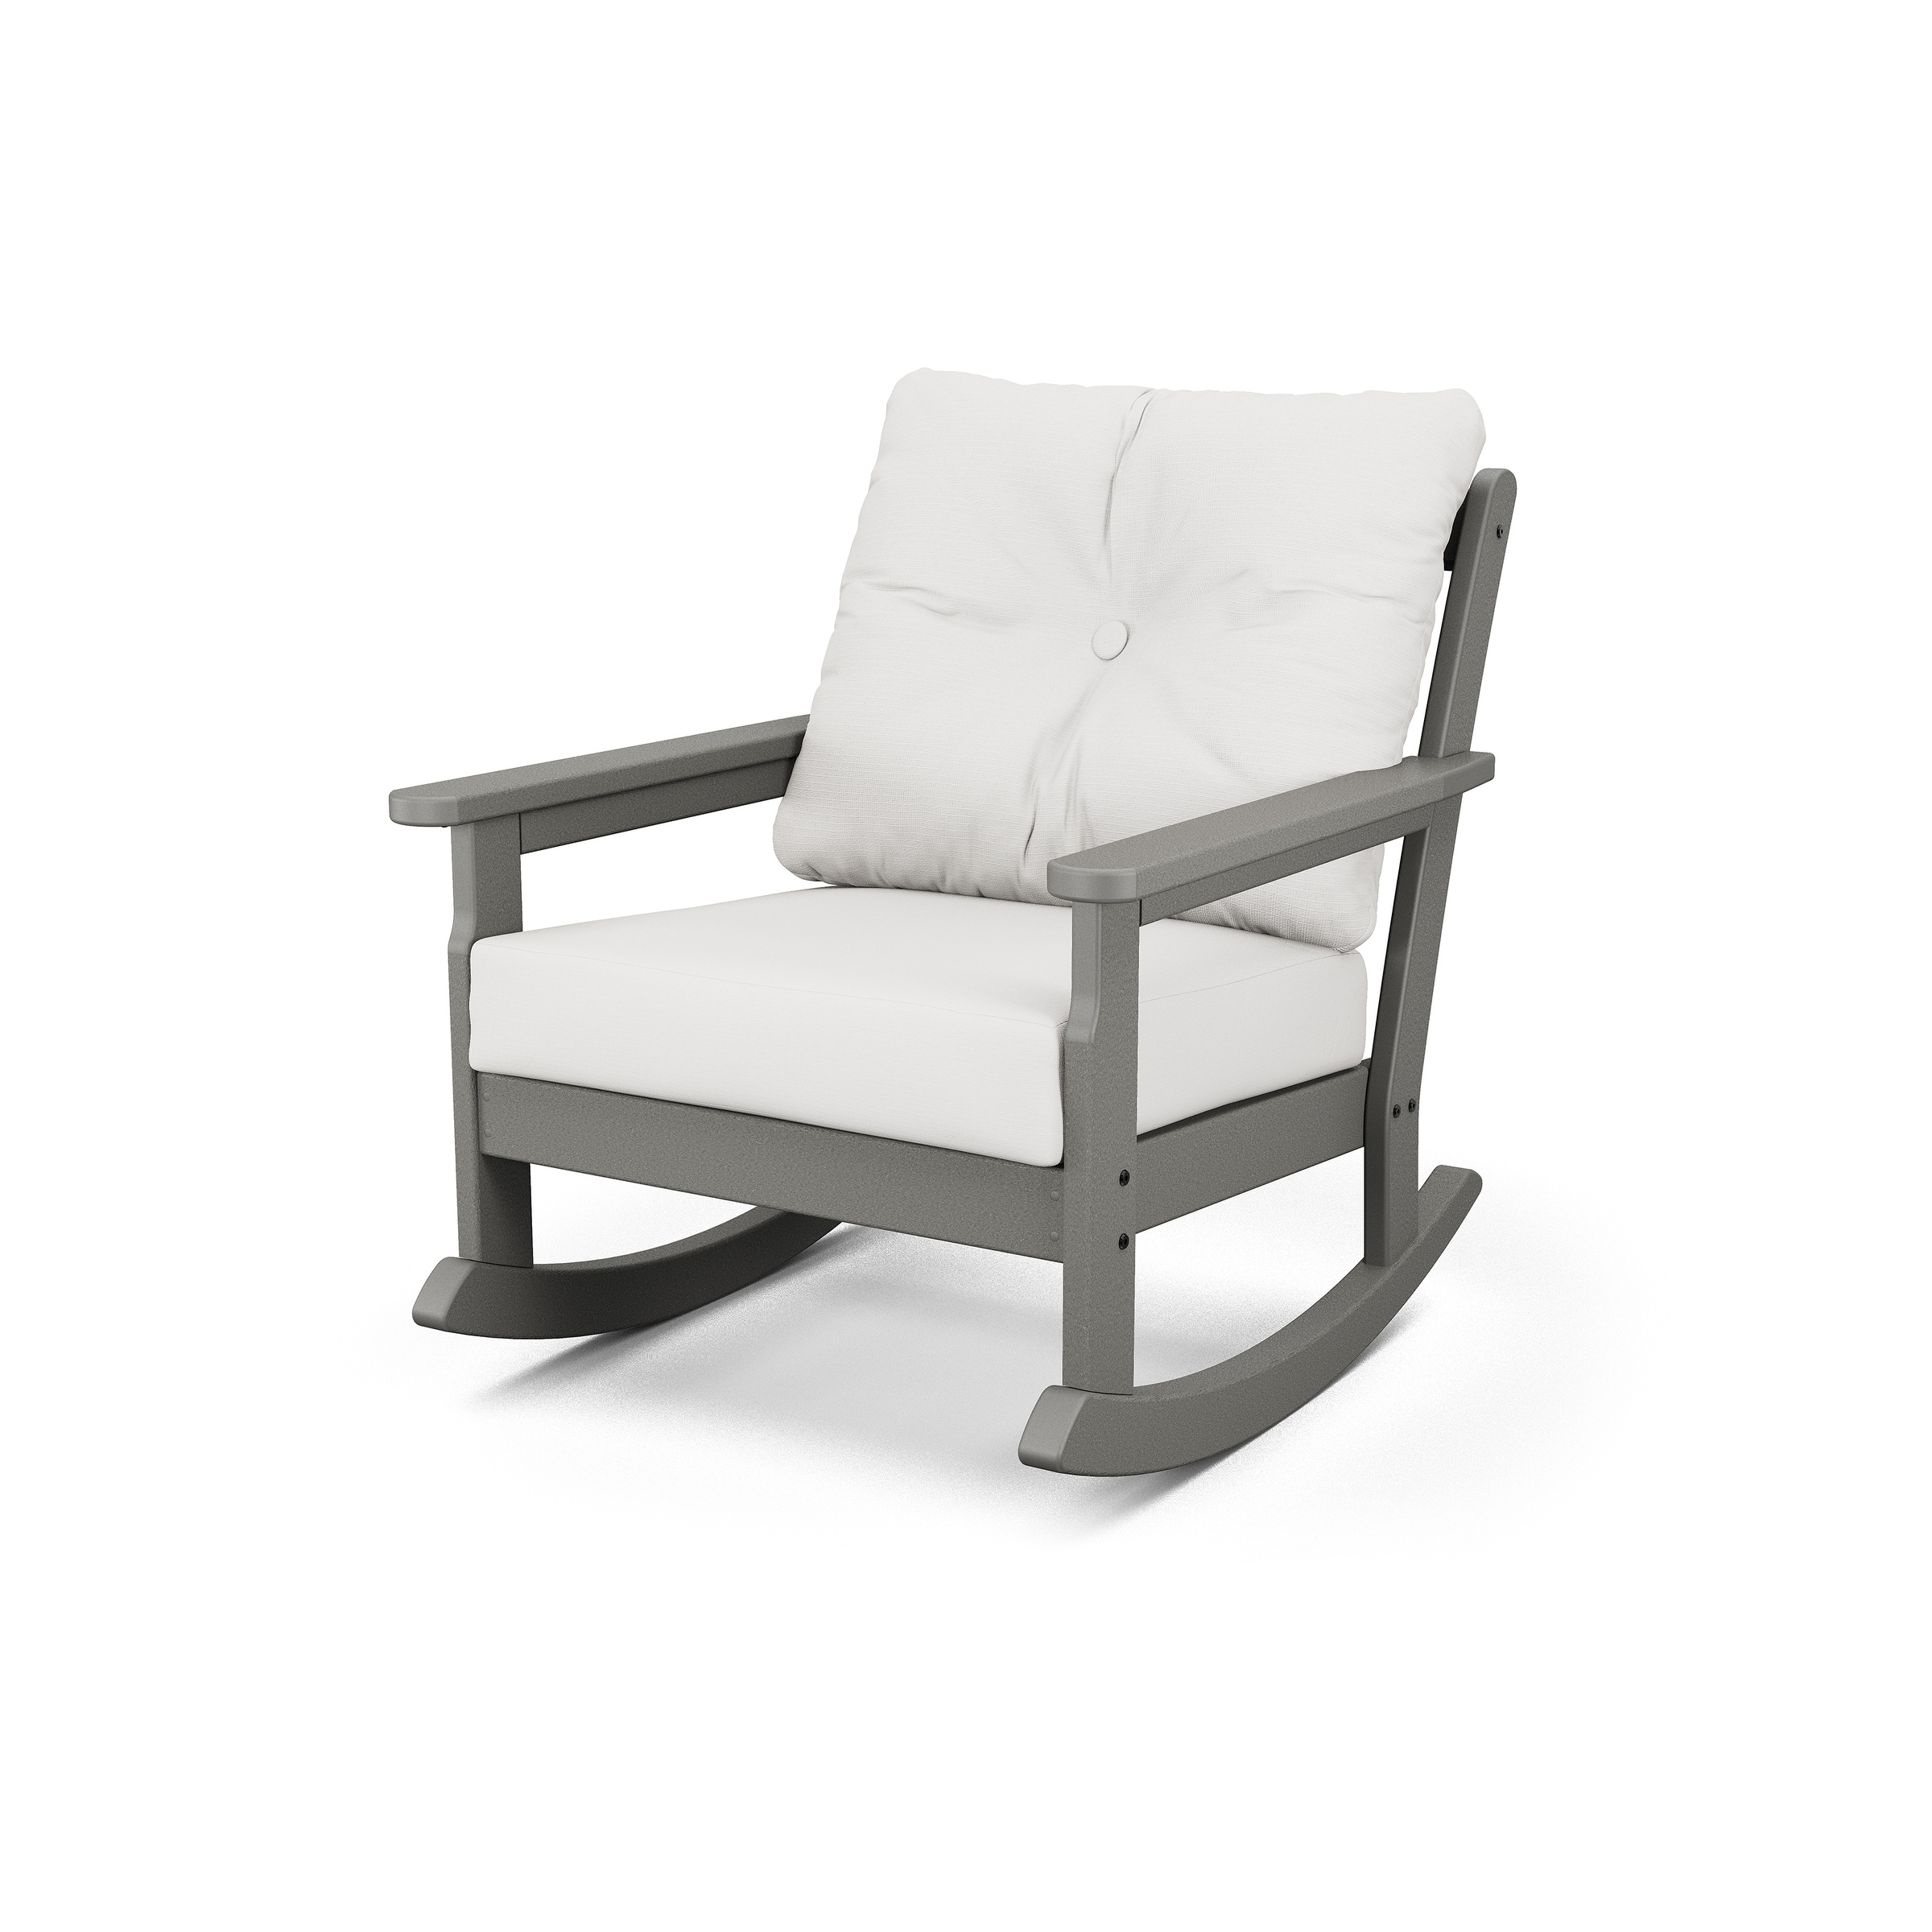 Polywood Vineyard Outdoor Deep Seating Rocking Chair